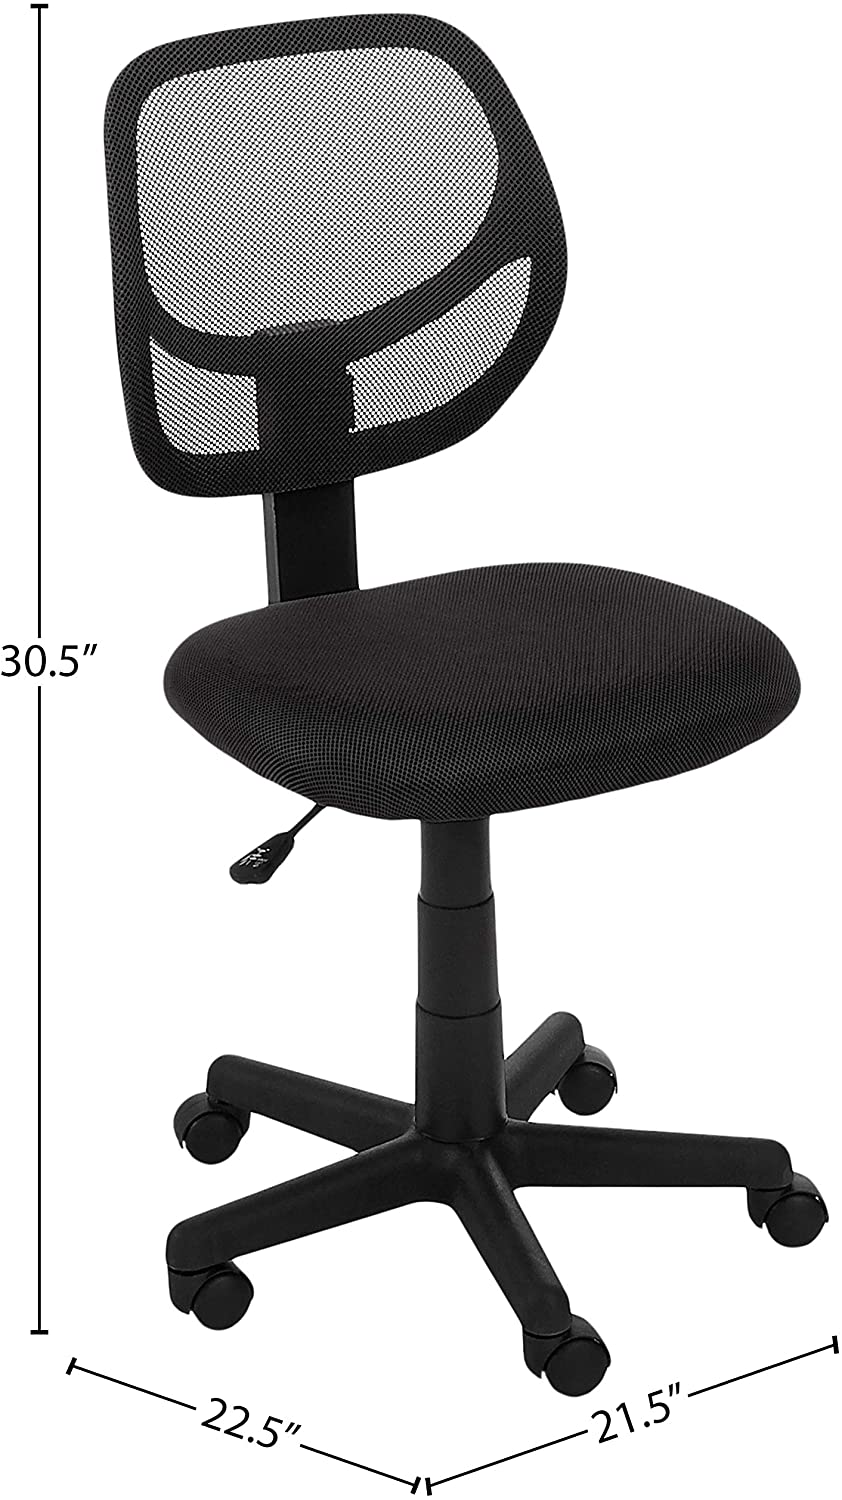 Low-Back, Upholstered Mesh, Adjustable, Swivel Computer Office Desk Chair, Black